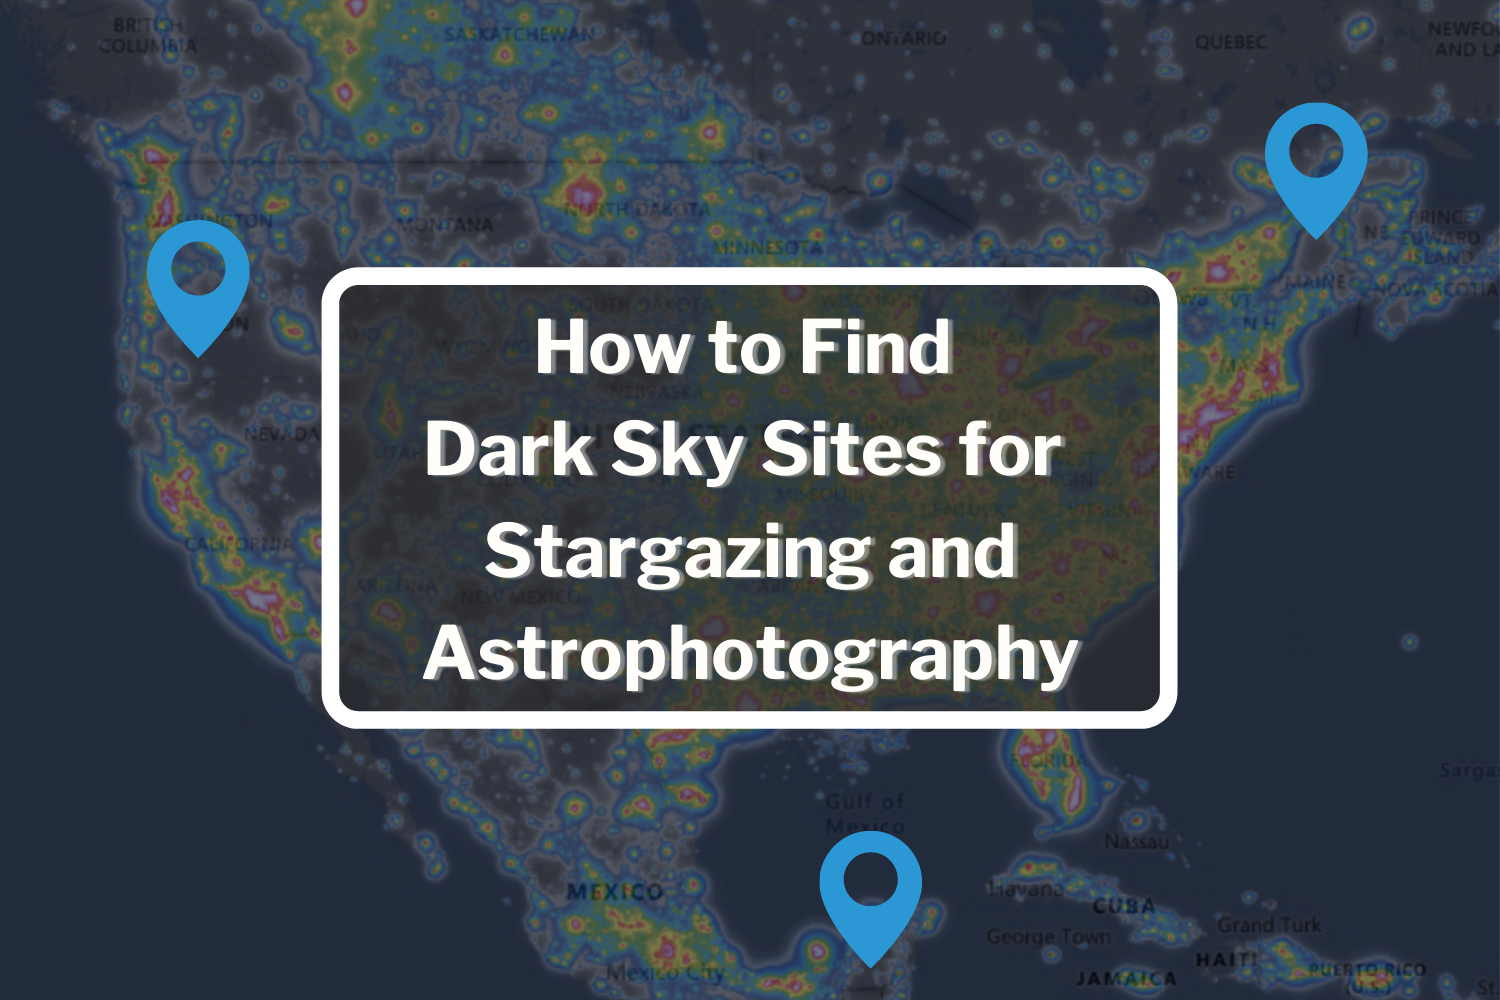 How to Find Dark Sky Sites [Stargazing & Astrophotography]